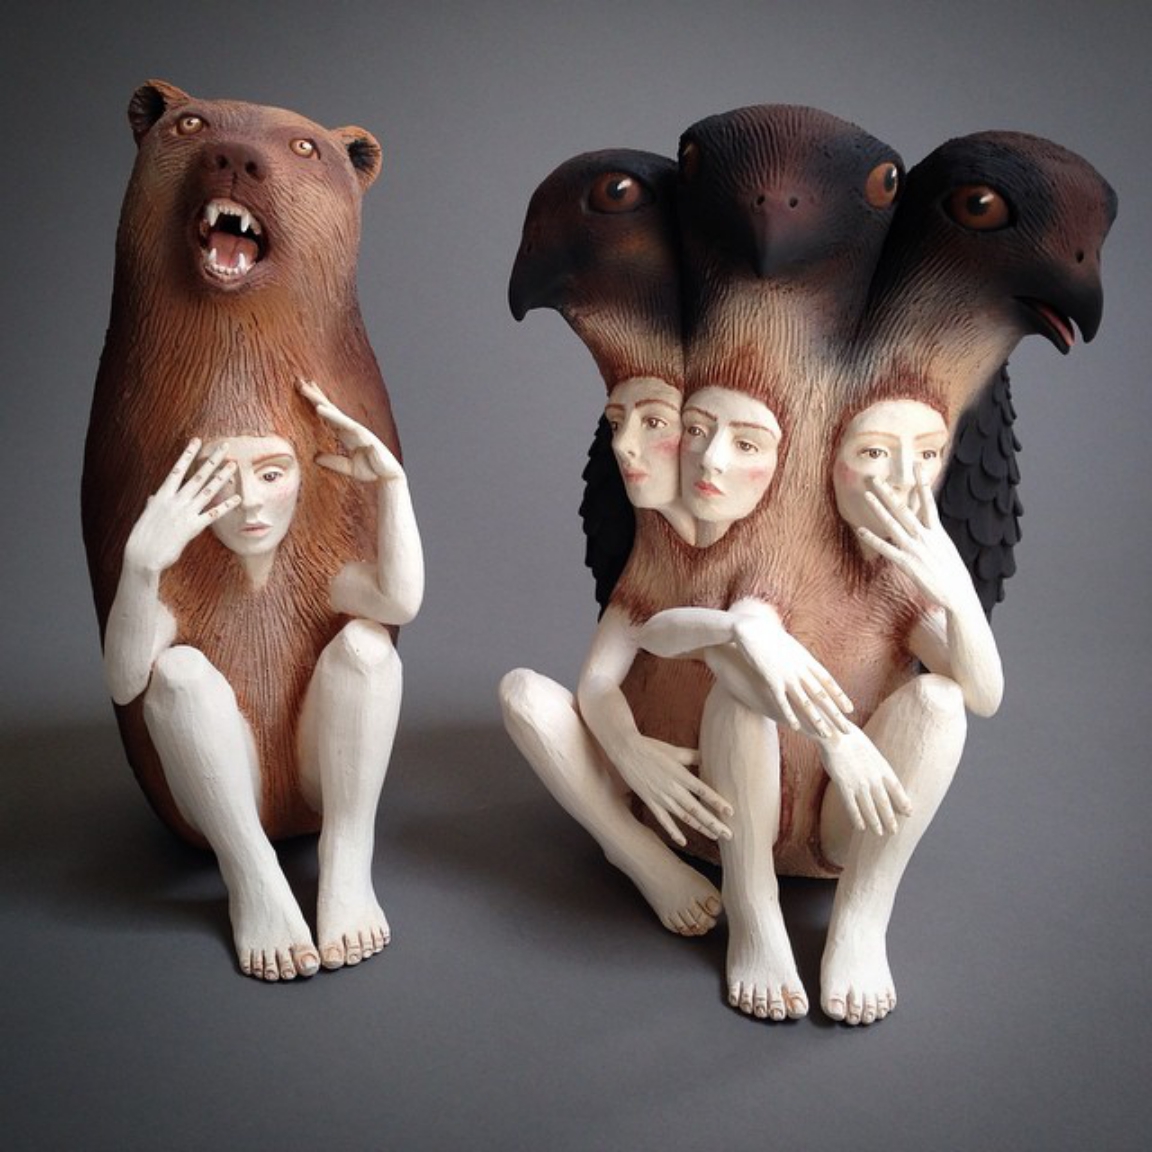 Crystal Morey's Striking Ceramic Sculptures Of Human Animal Hybrids (6)